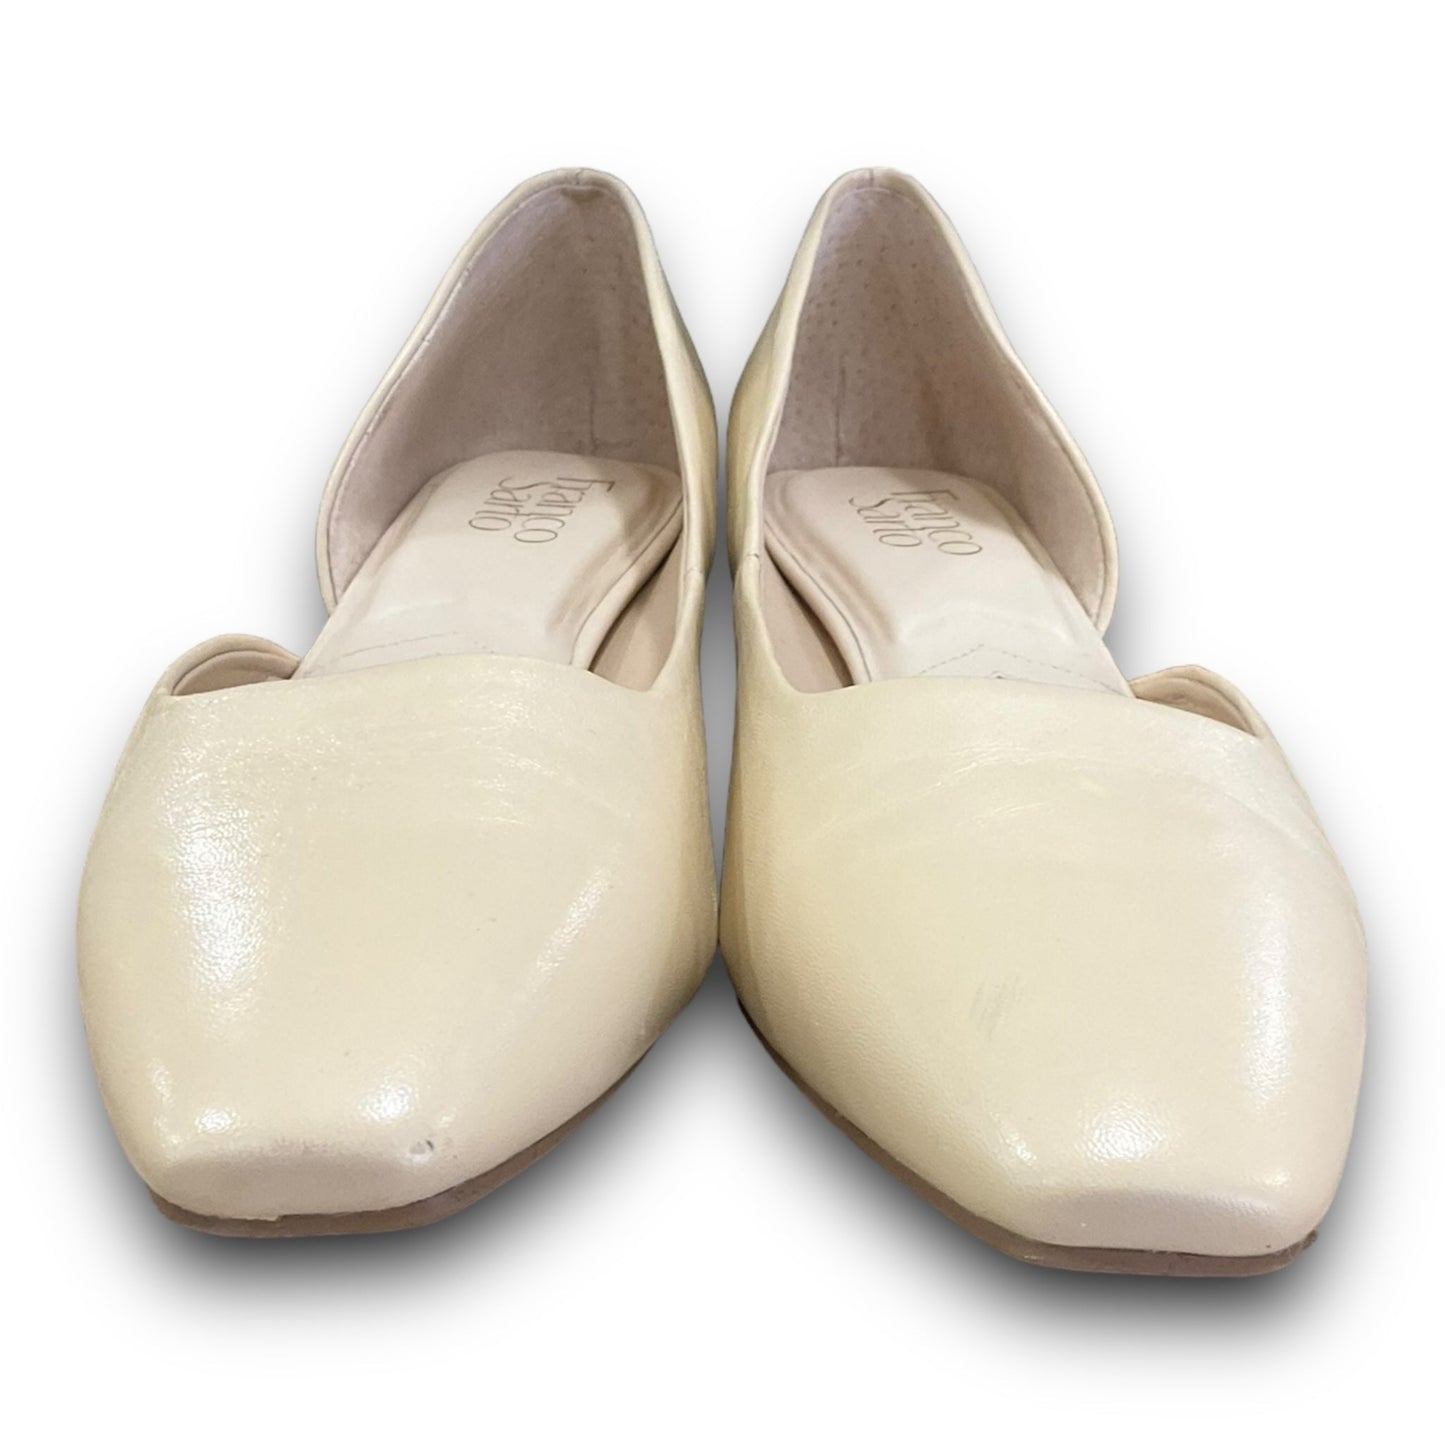 Shoes Heels Block By Franco Sarto  Size: 9.5